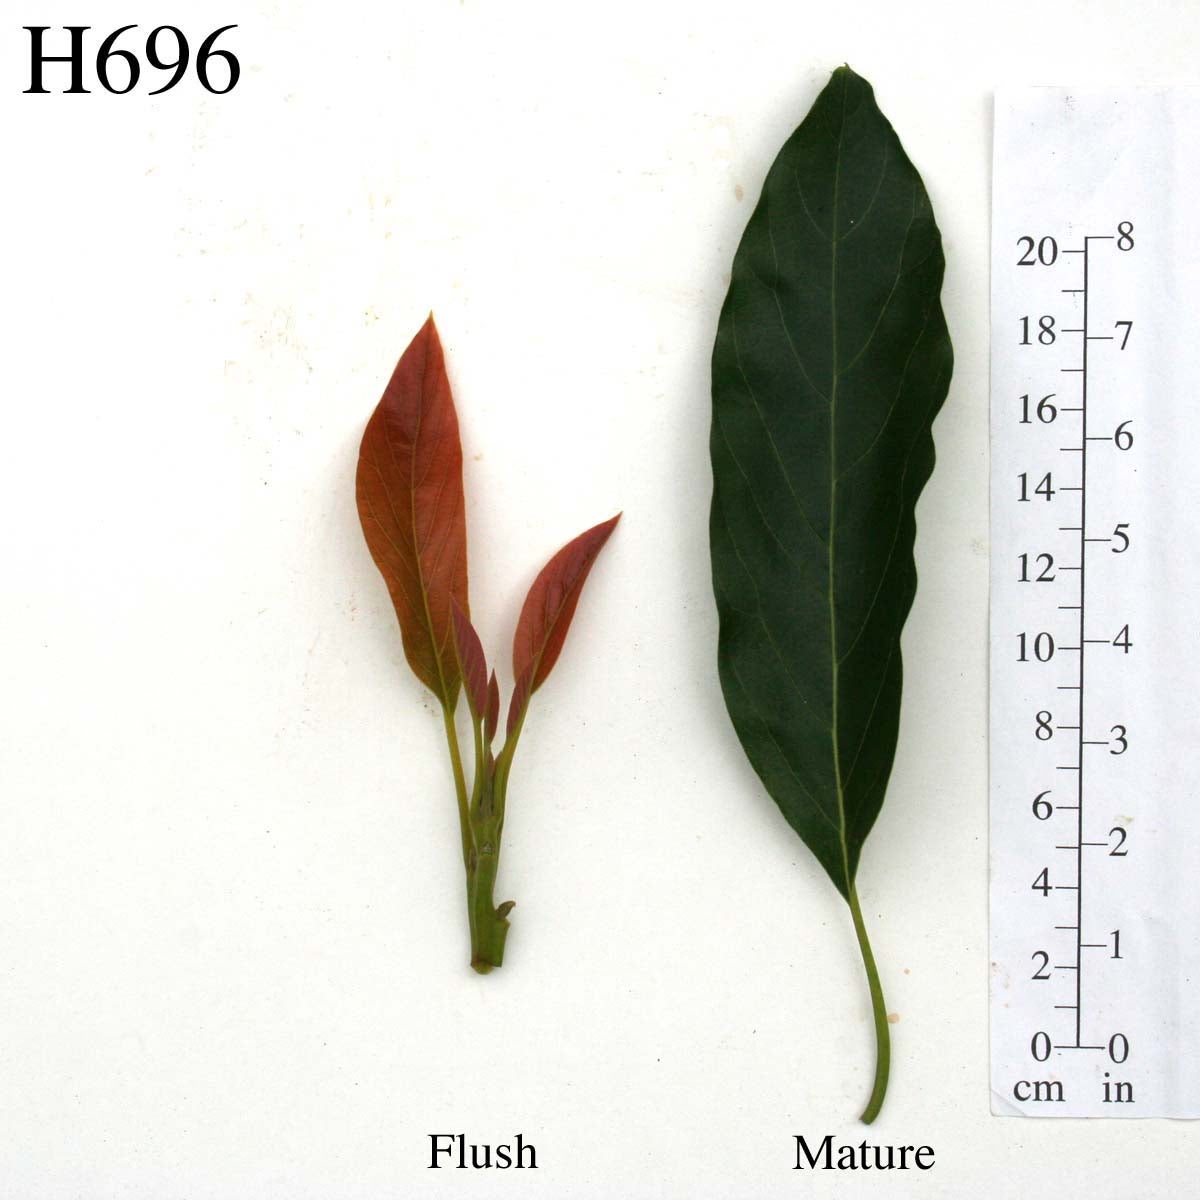 H696 Leaves